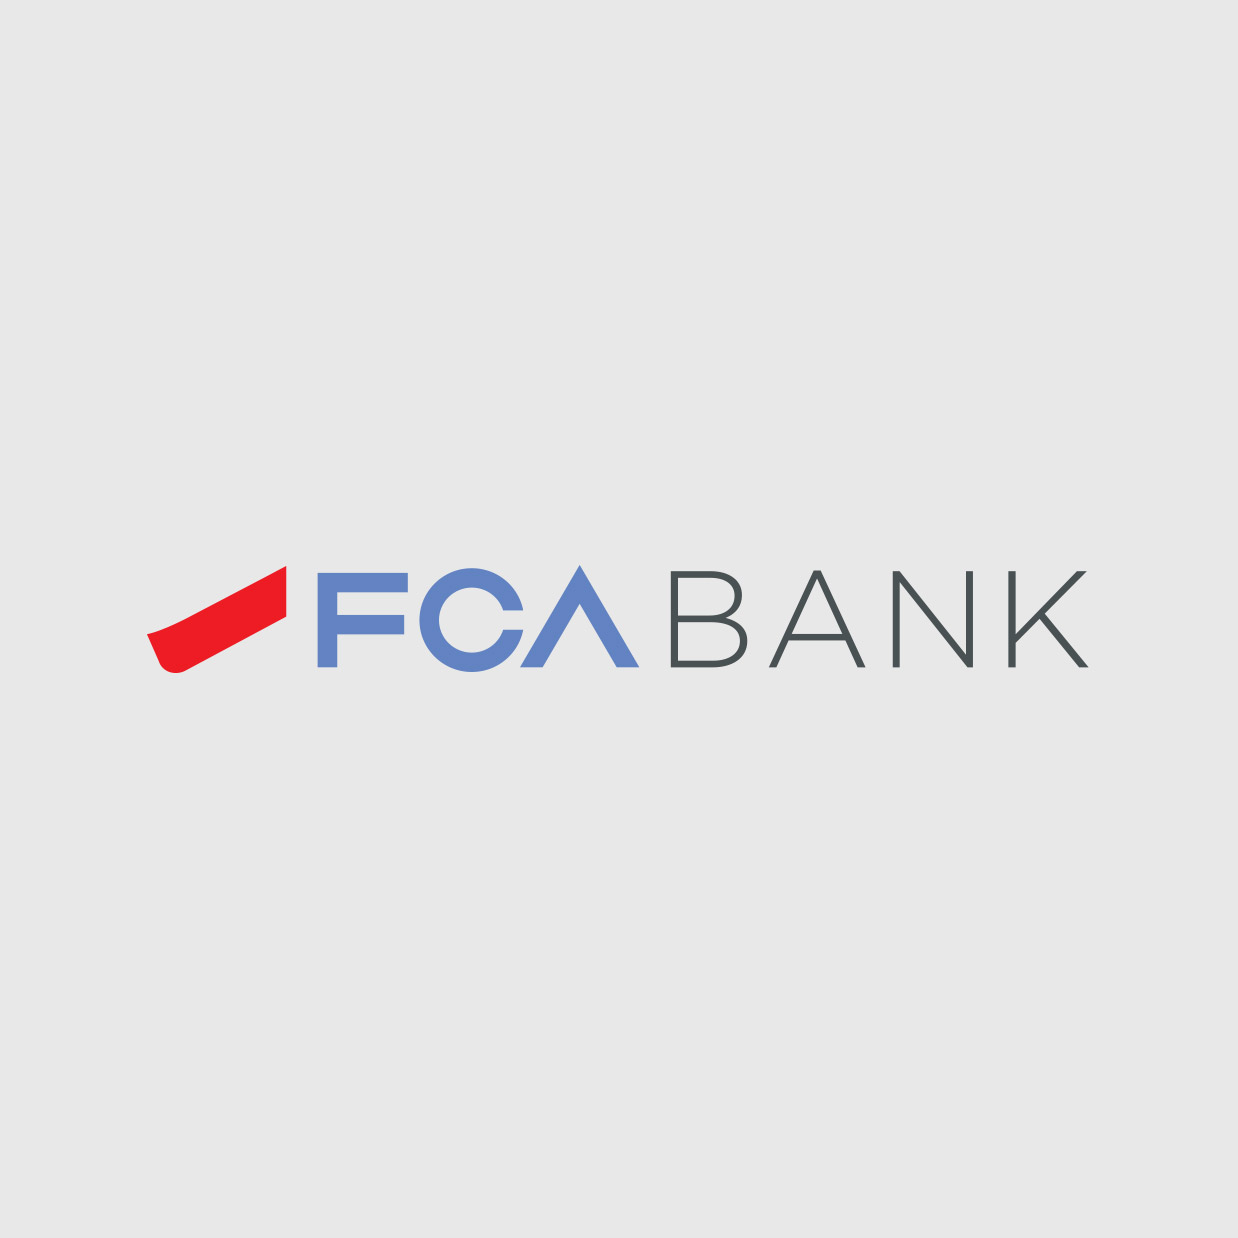 FCA BANK CORPORATE